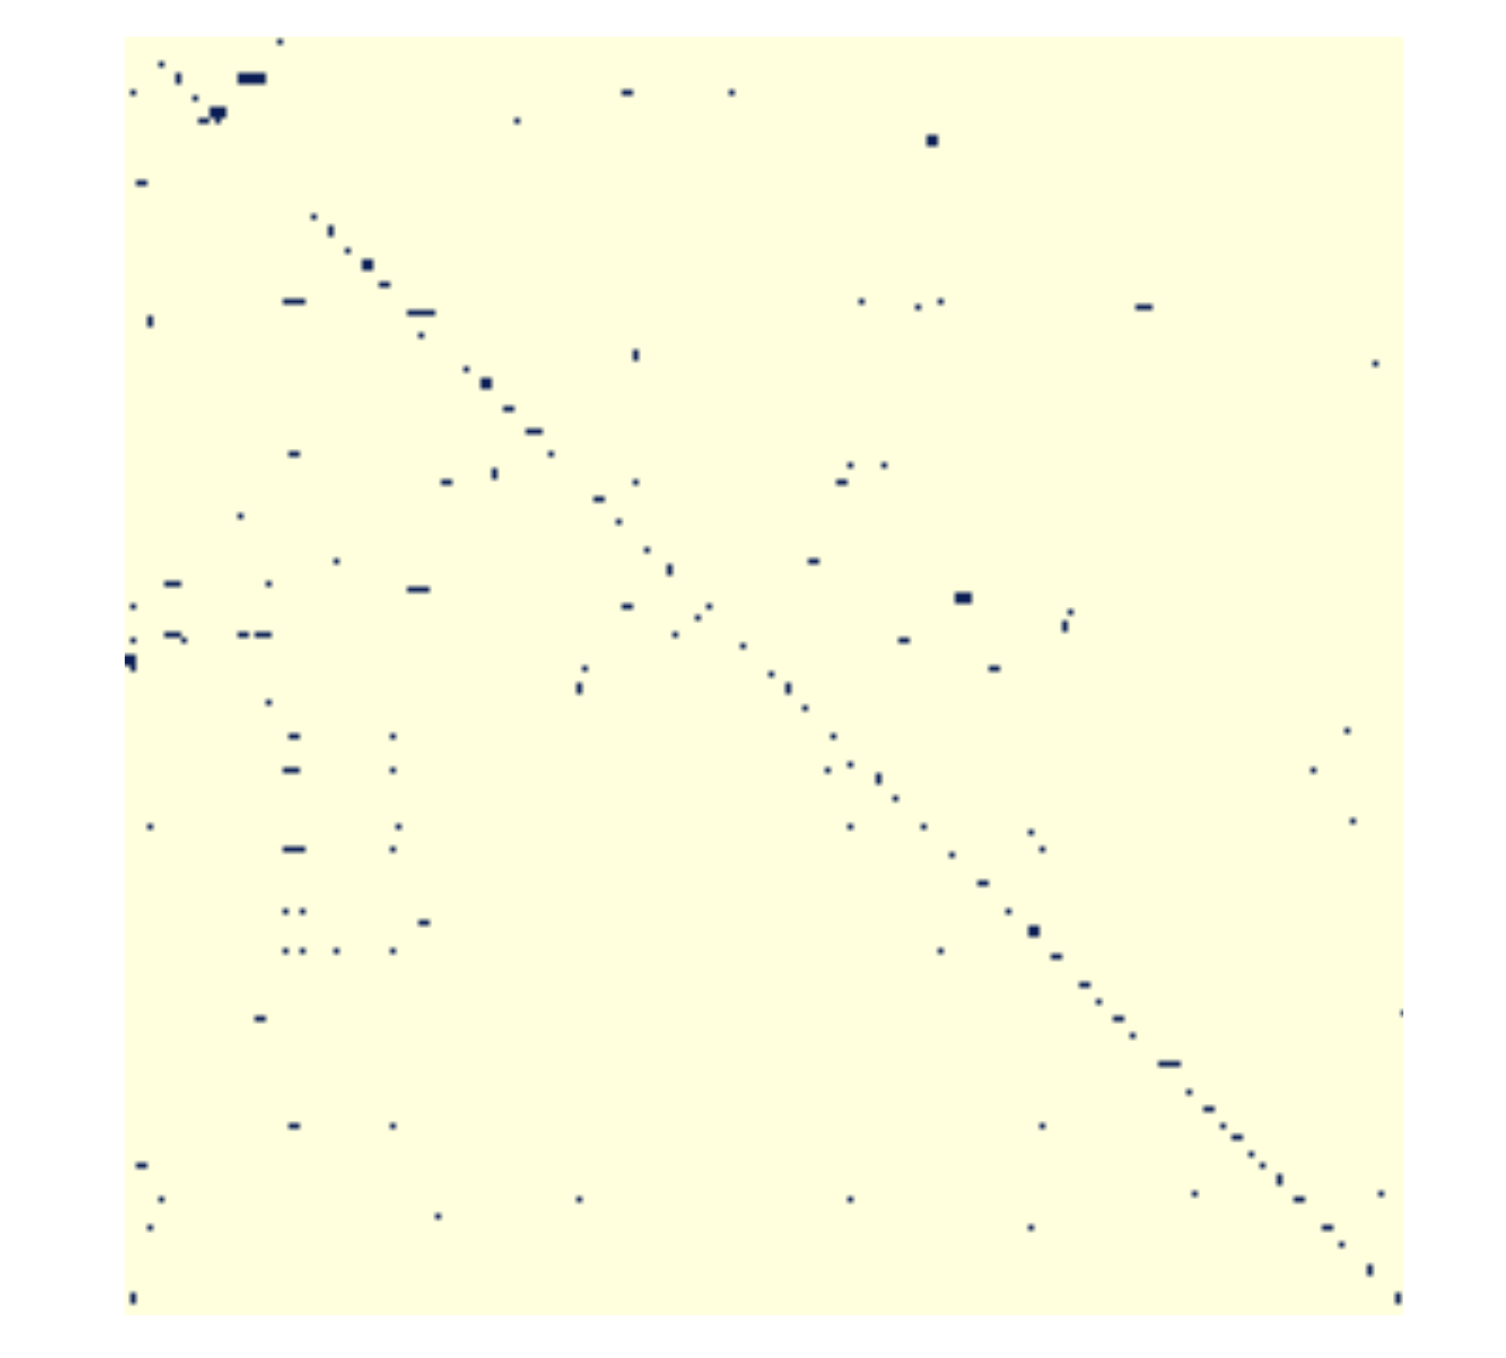 Matrix plots with nxviz